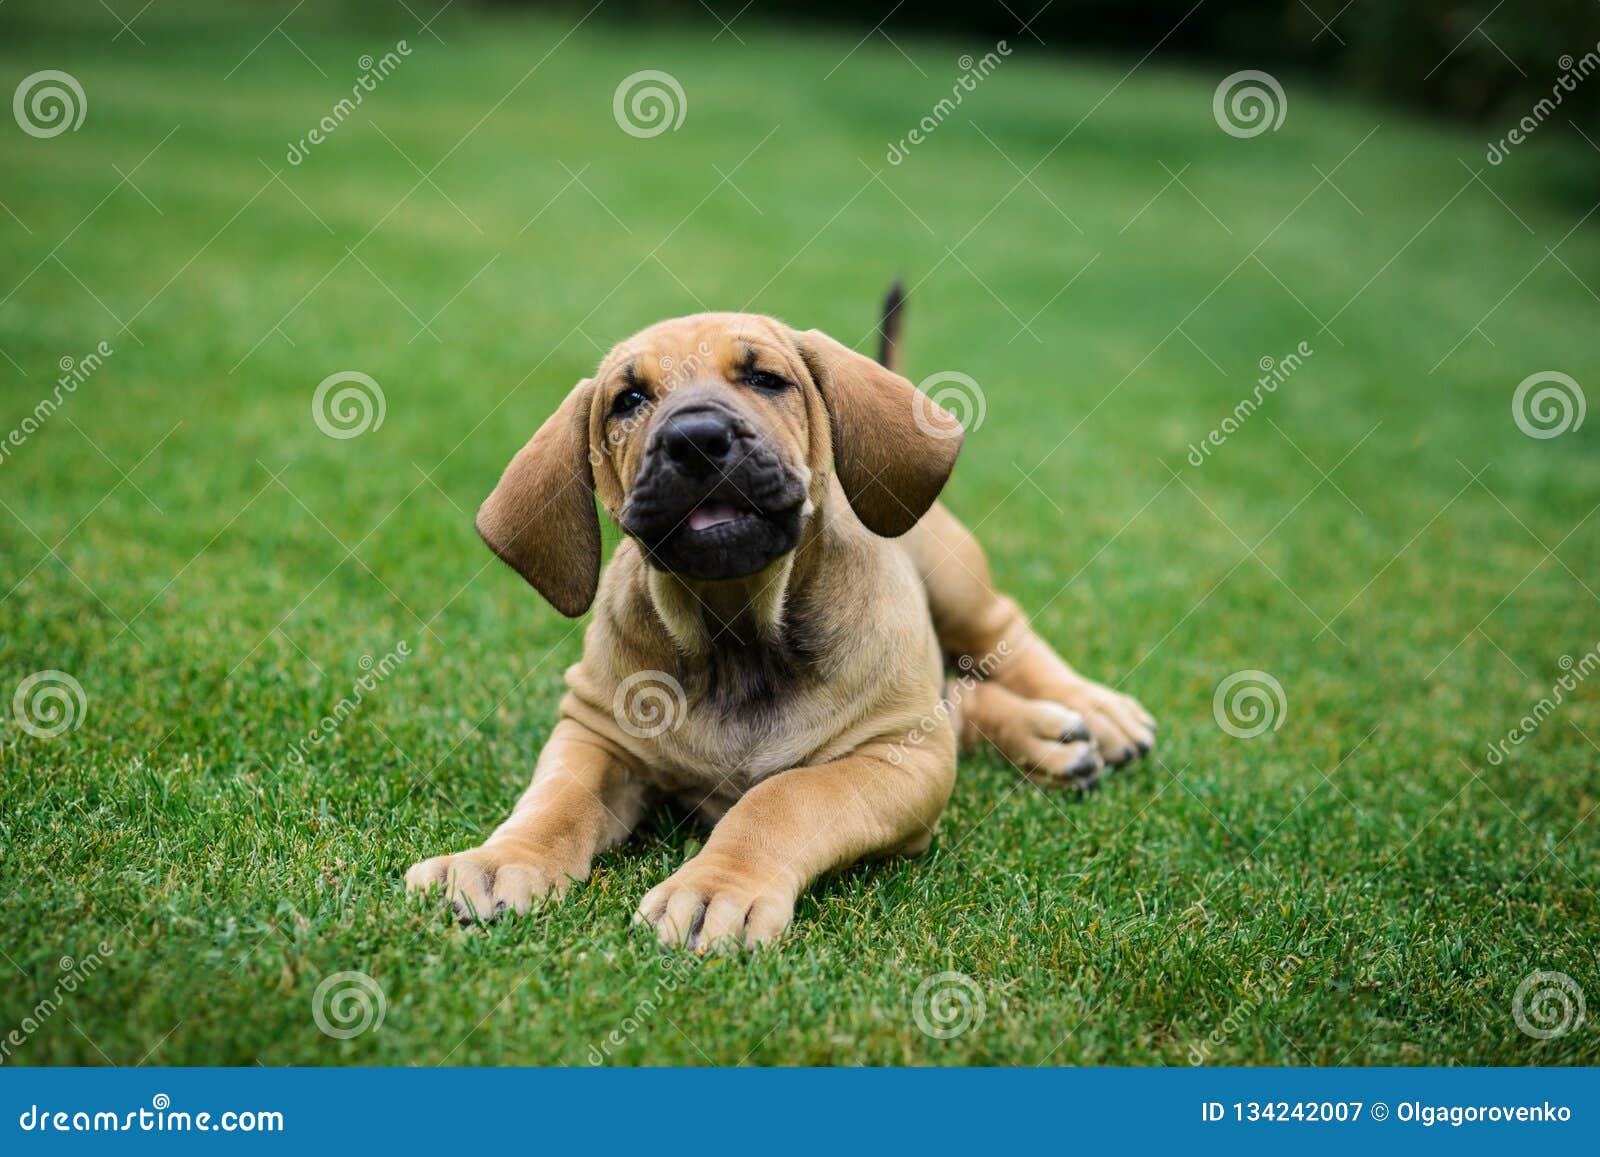 Adorable Fila Brasileiro Puppy Portrait Stock Image - Image of